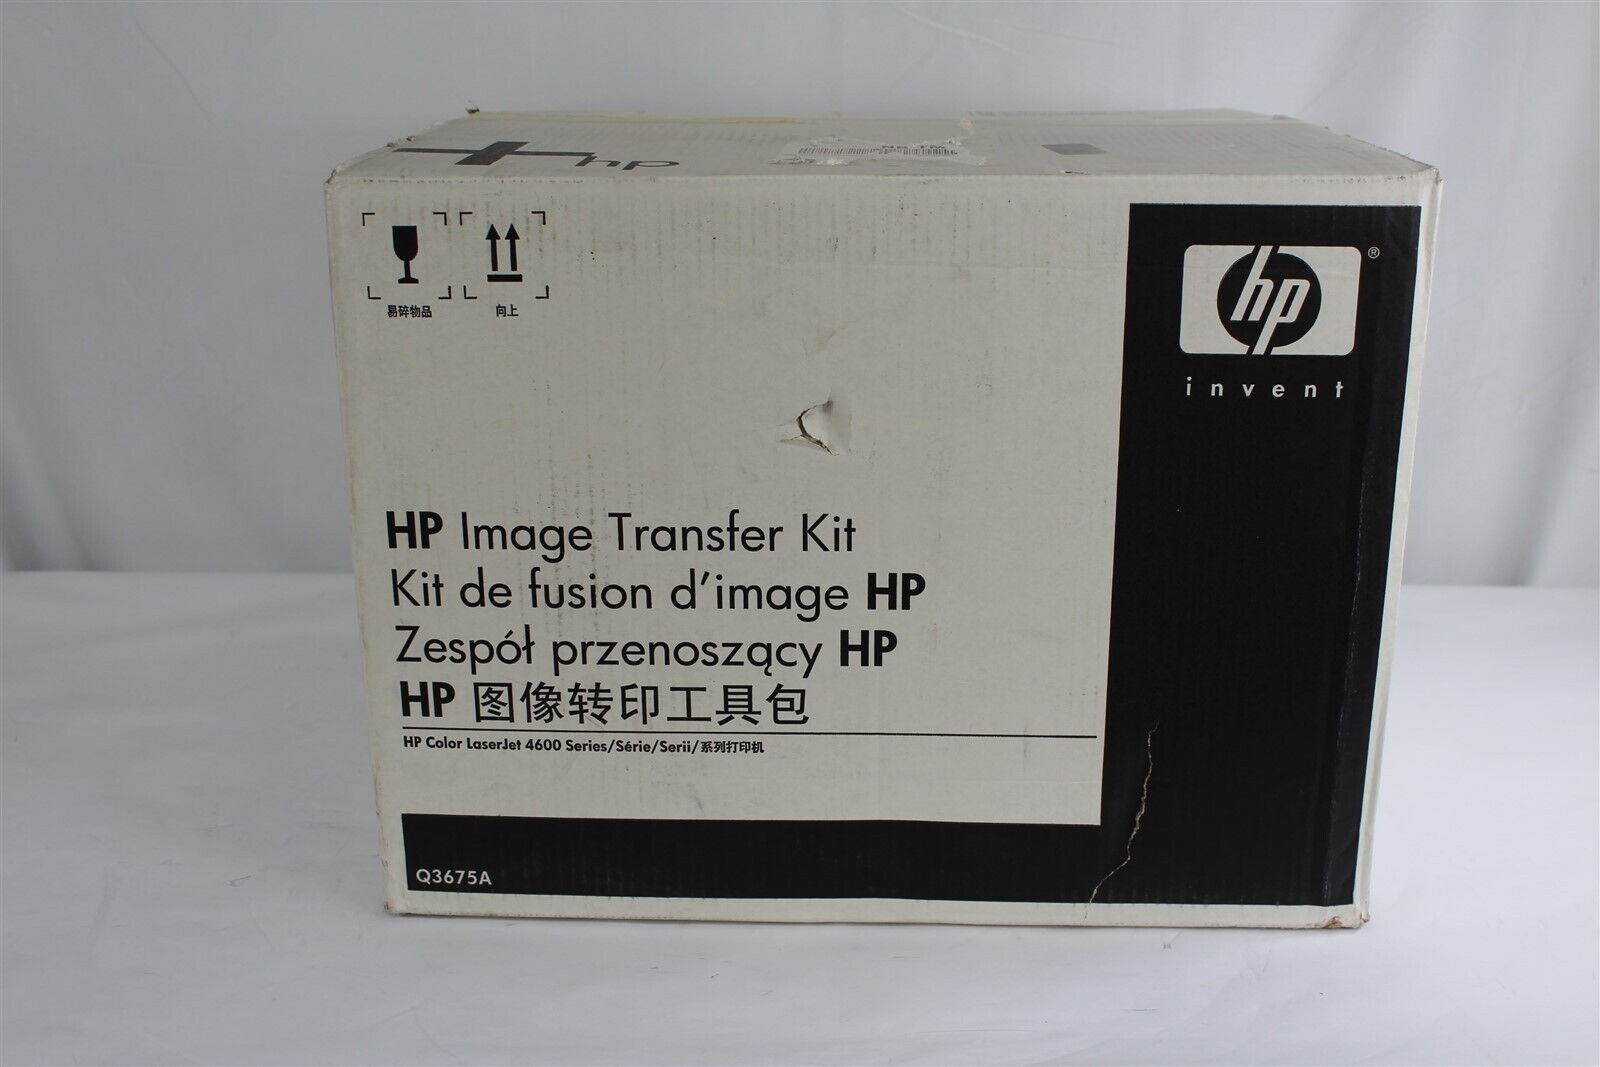 Sealed HP C9724A Image Transfer Kit for Color LaserJet Series 4600 Q3675A 